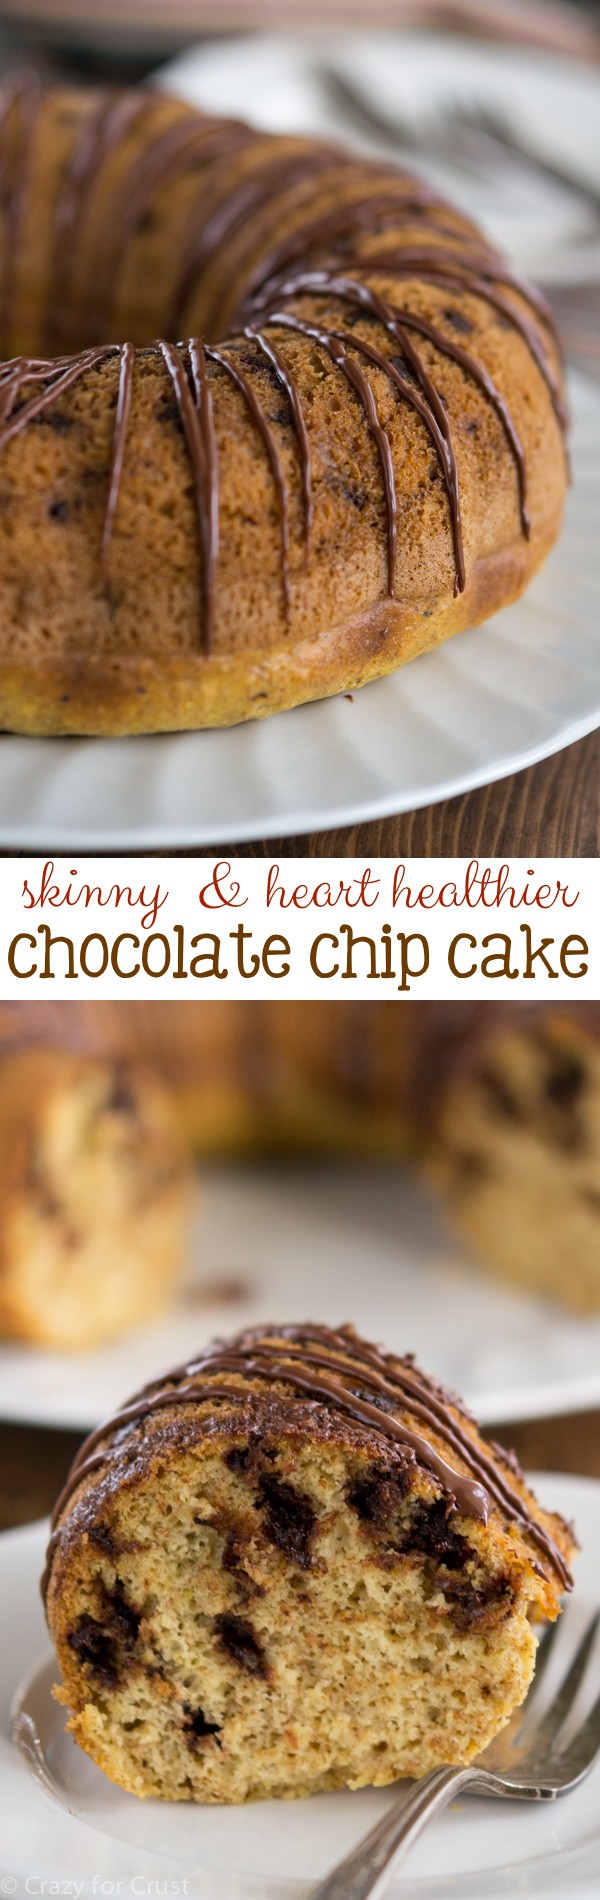 Heart Healthier Chocolate Chip Cake